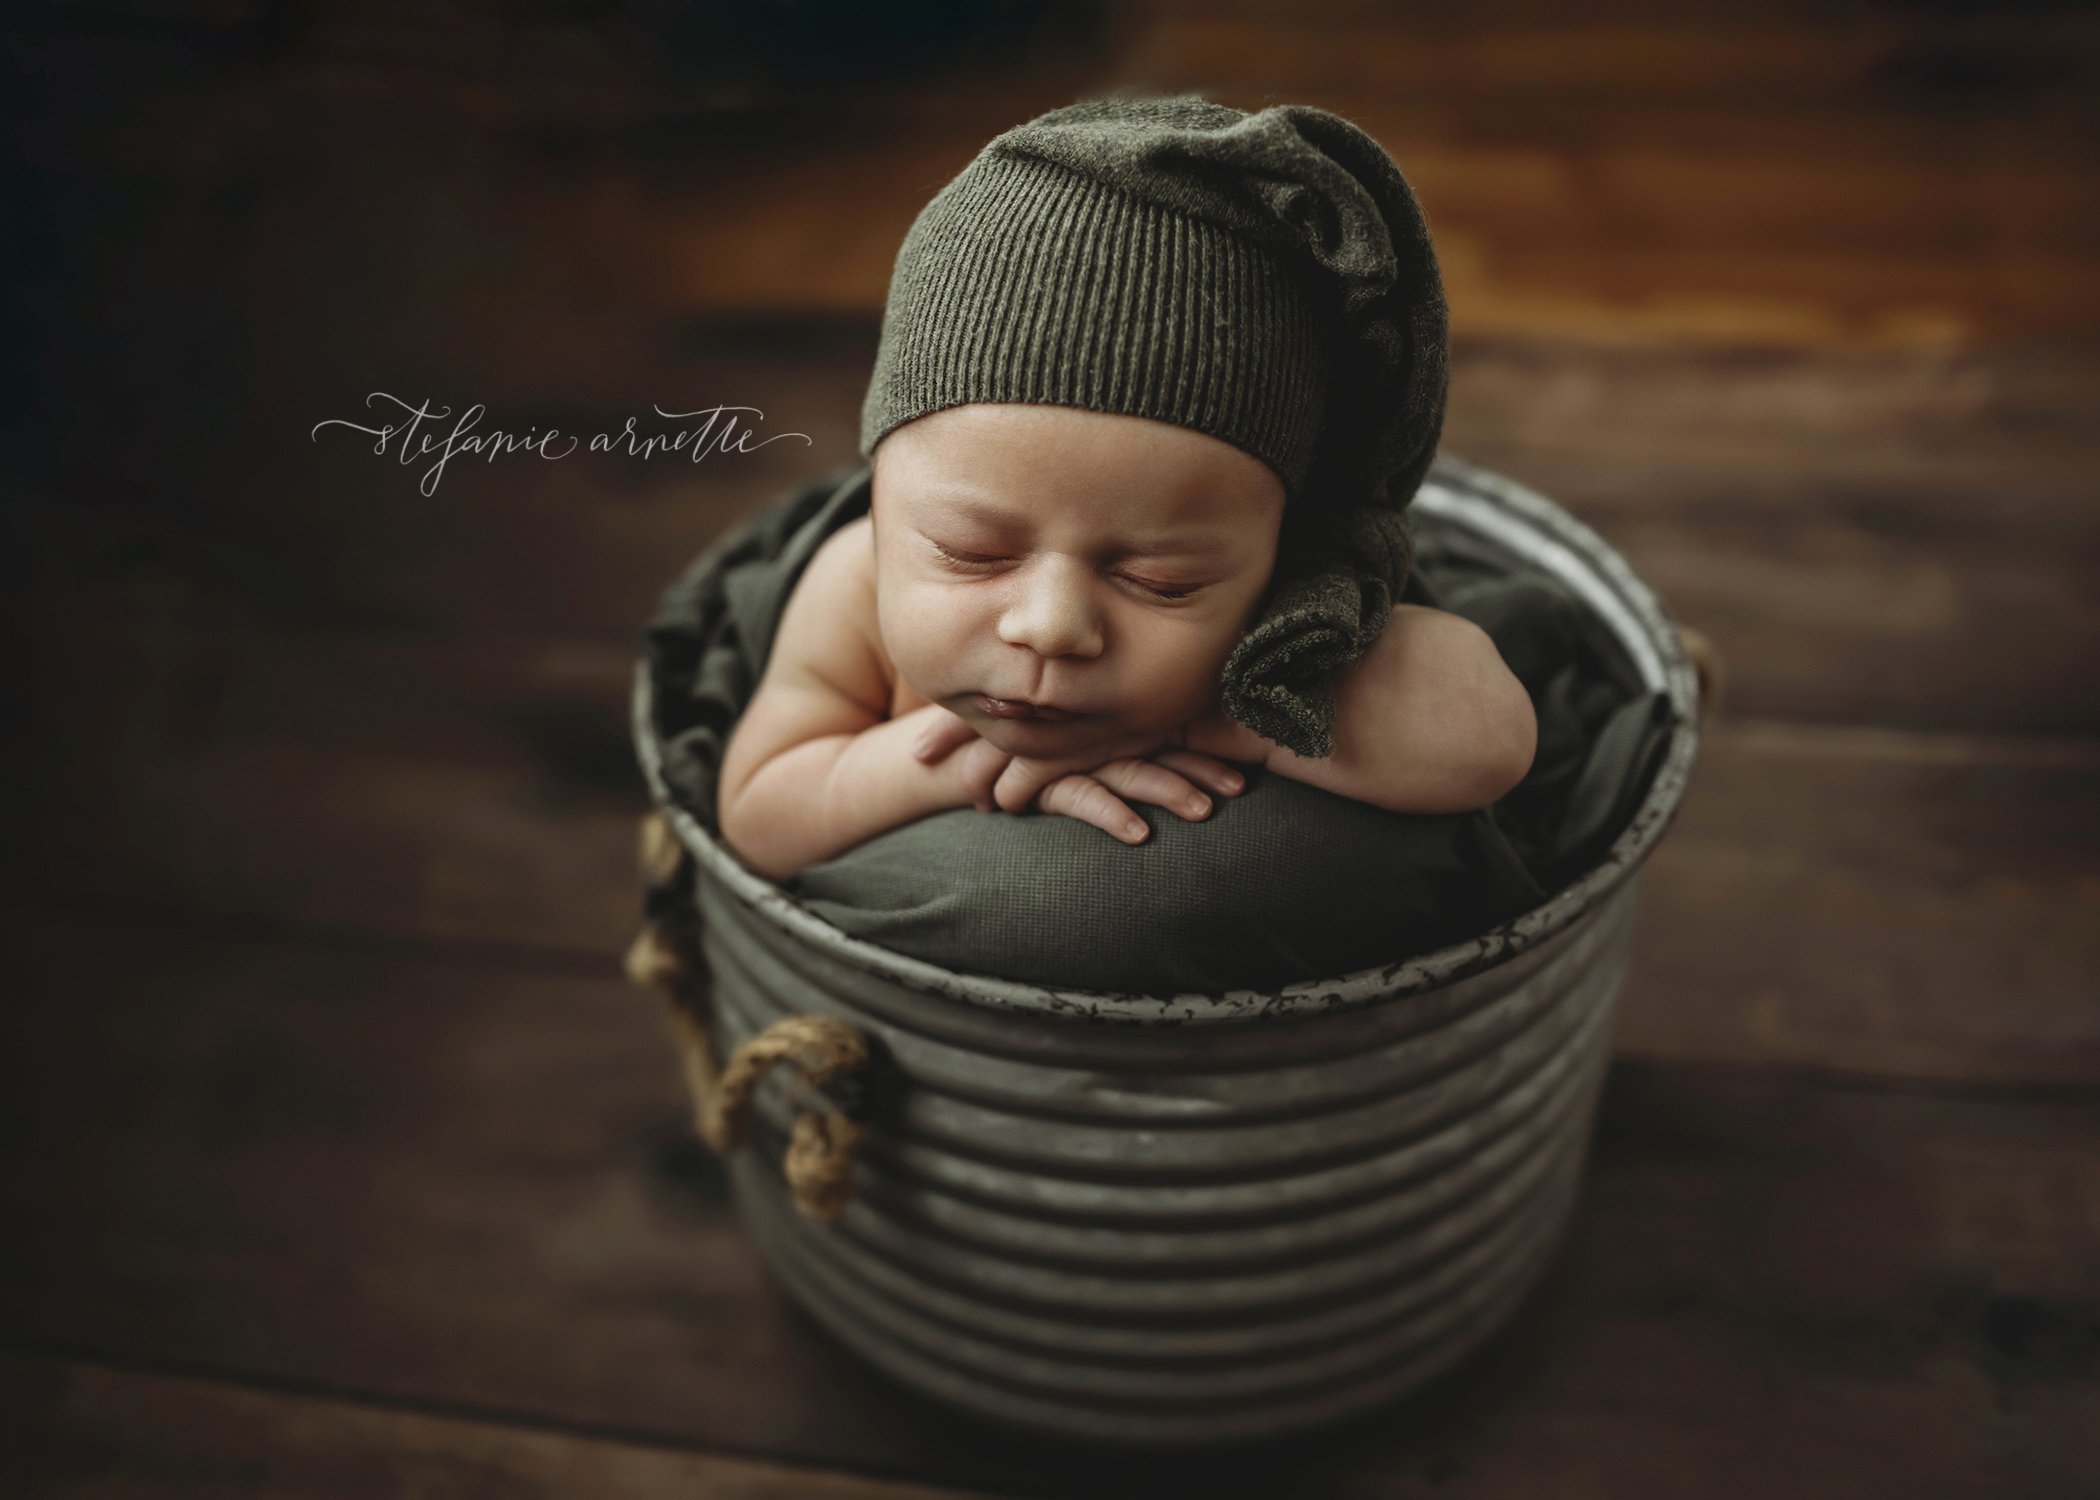 smyrna newborn photographer, newborn photography in smyrna, newborn photography packages